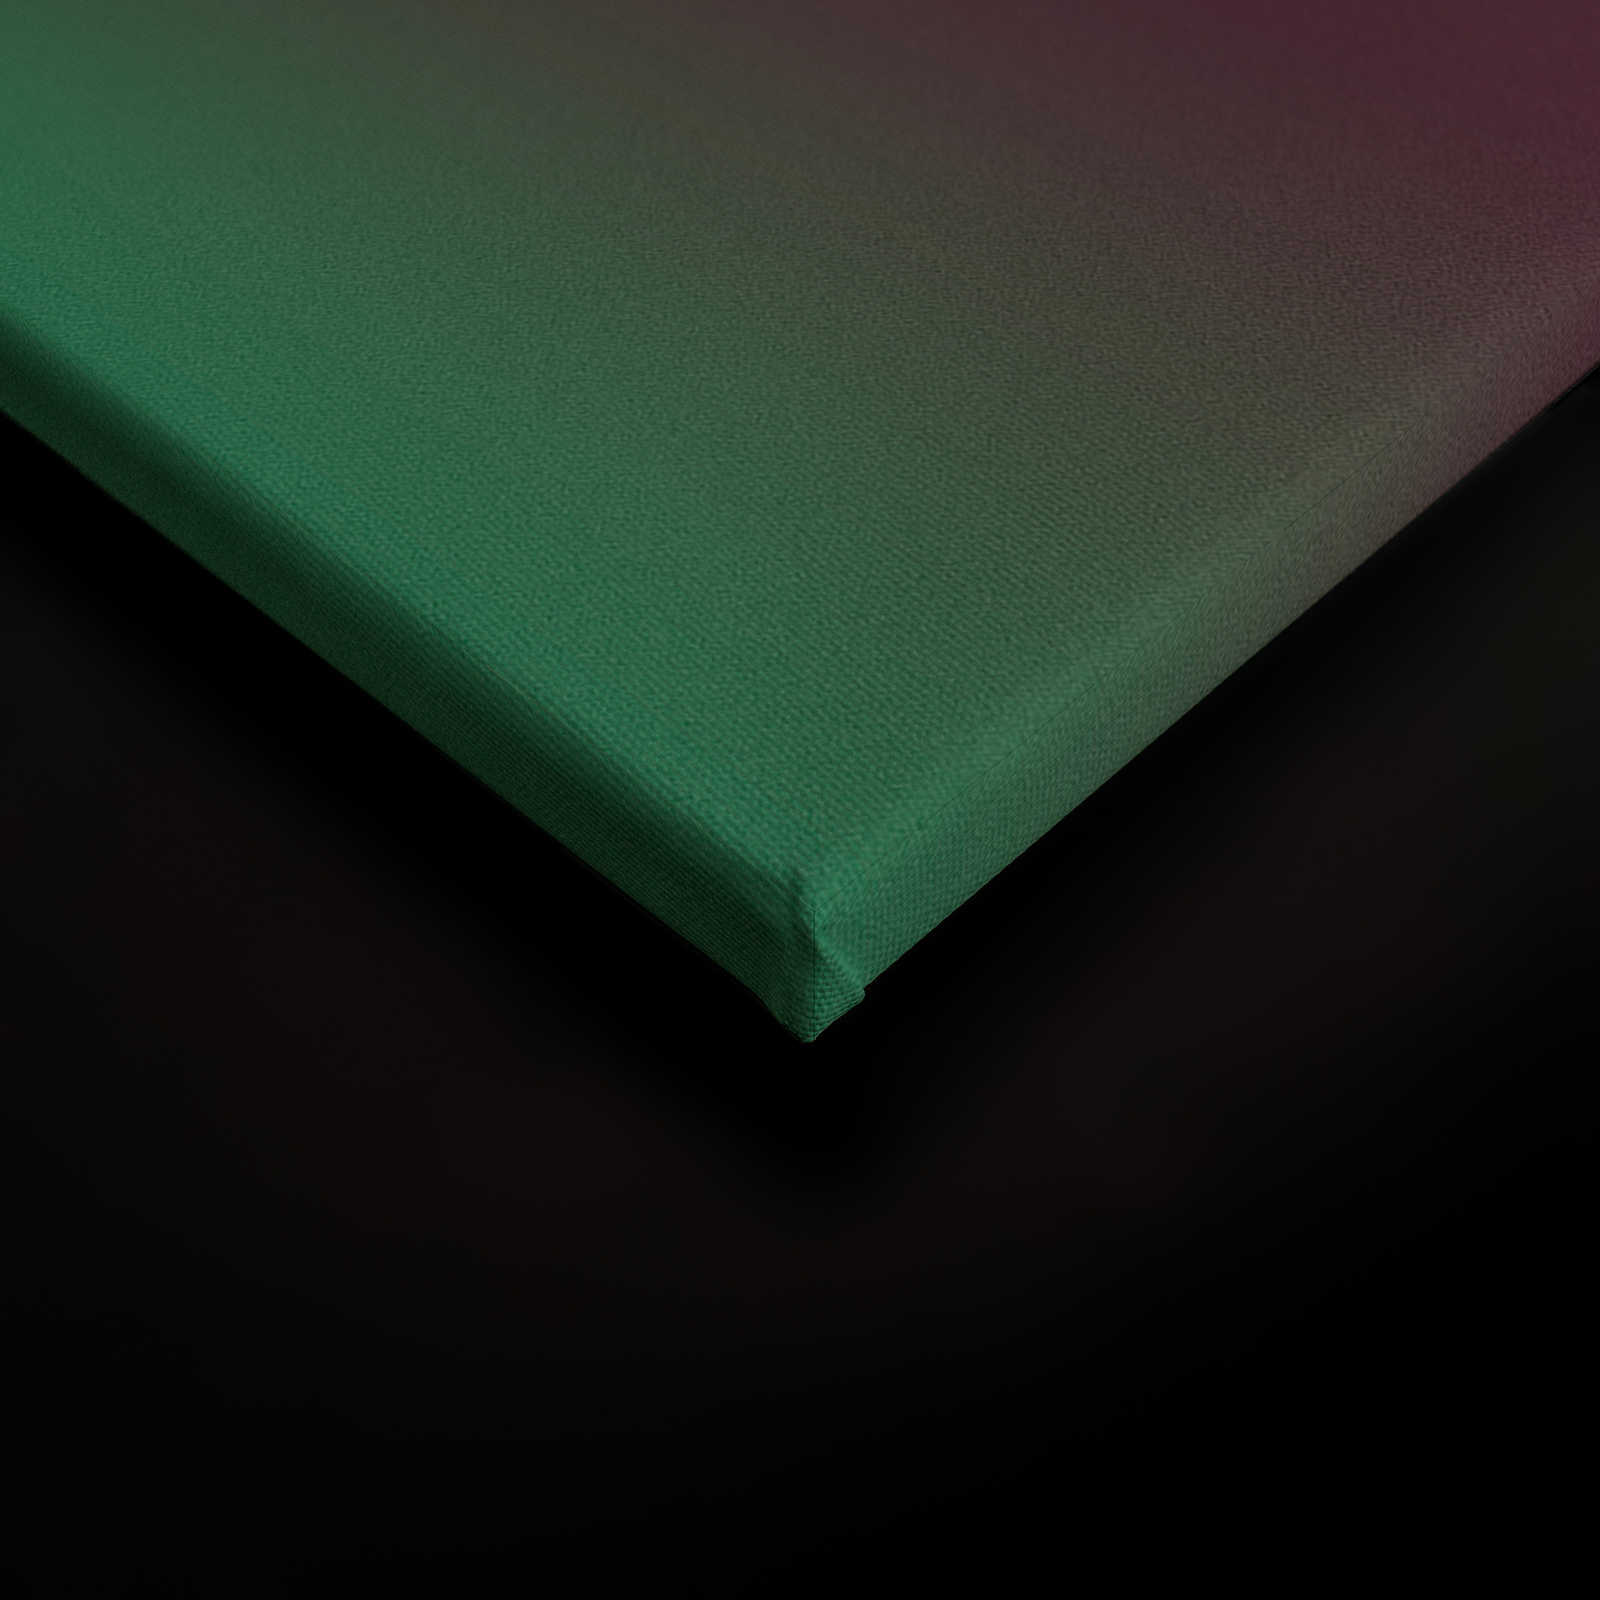             Over the Rainbow 2 - Farbverlauf Leinwandbild buntes Streifendesign – 1,20 m x 0,80 m
        